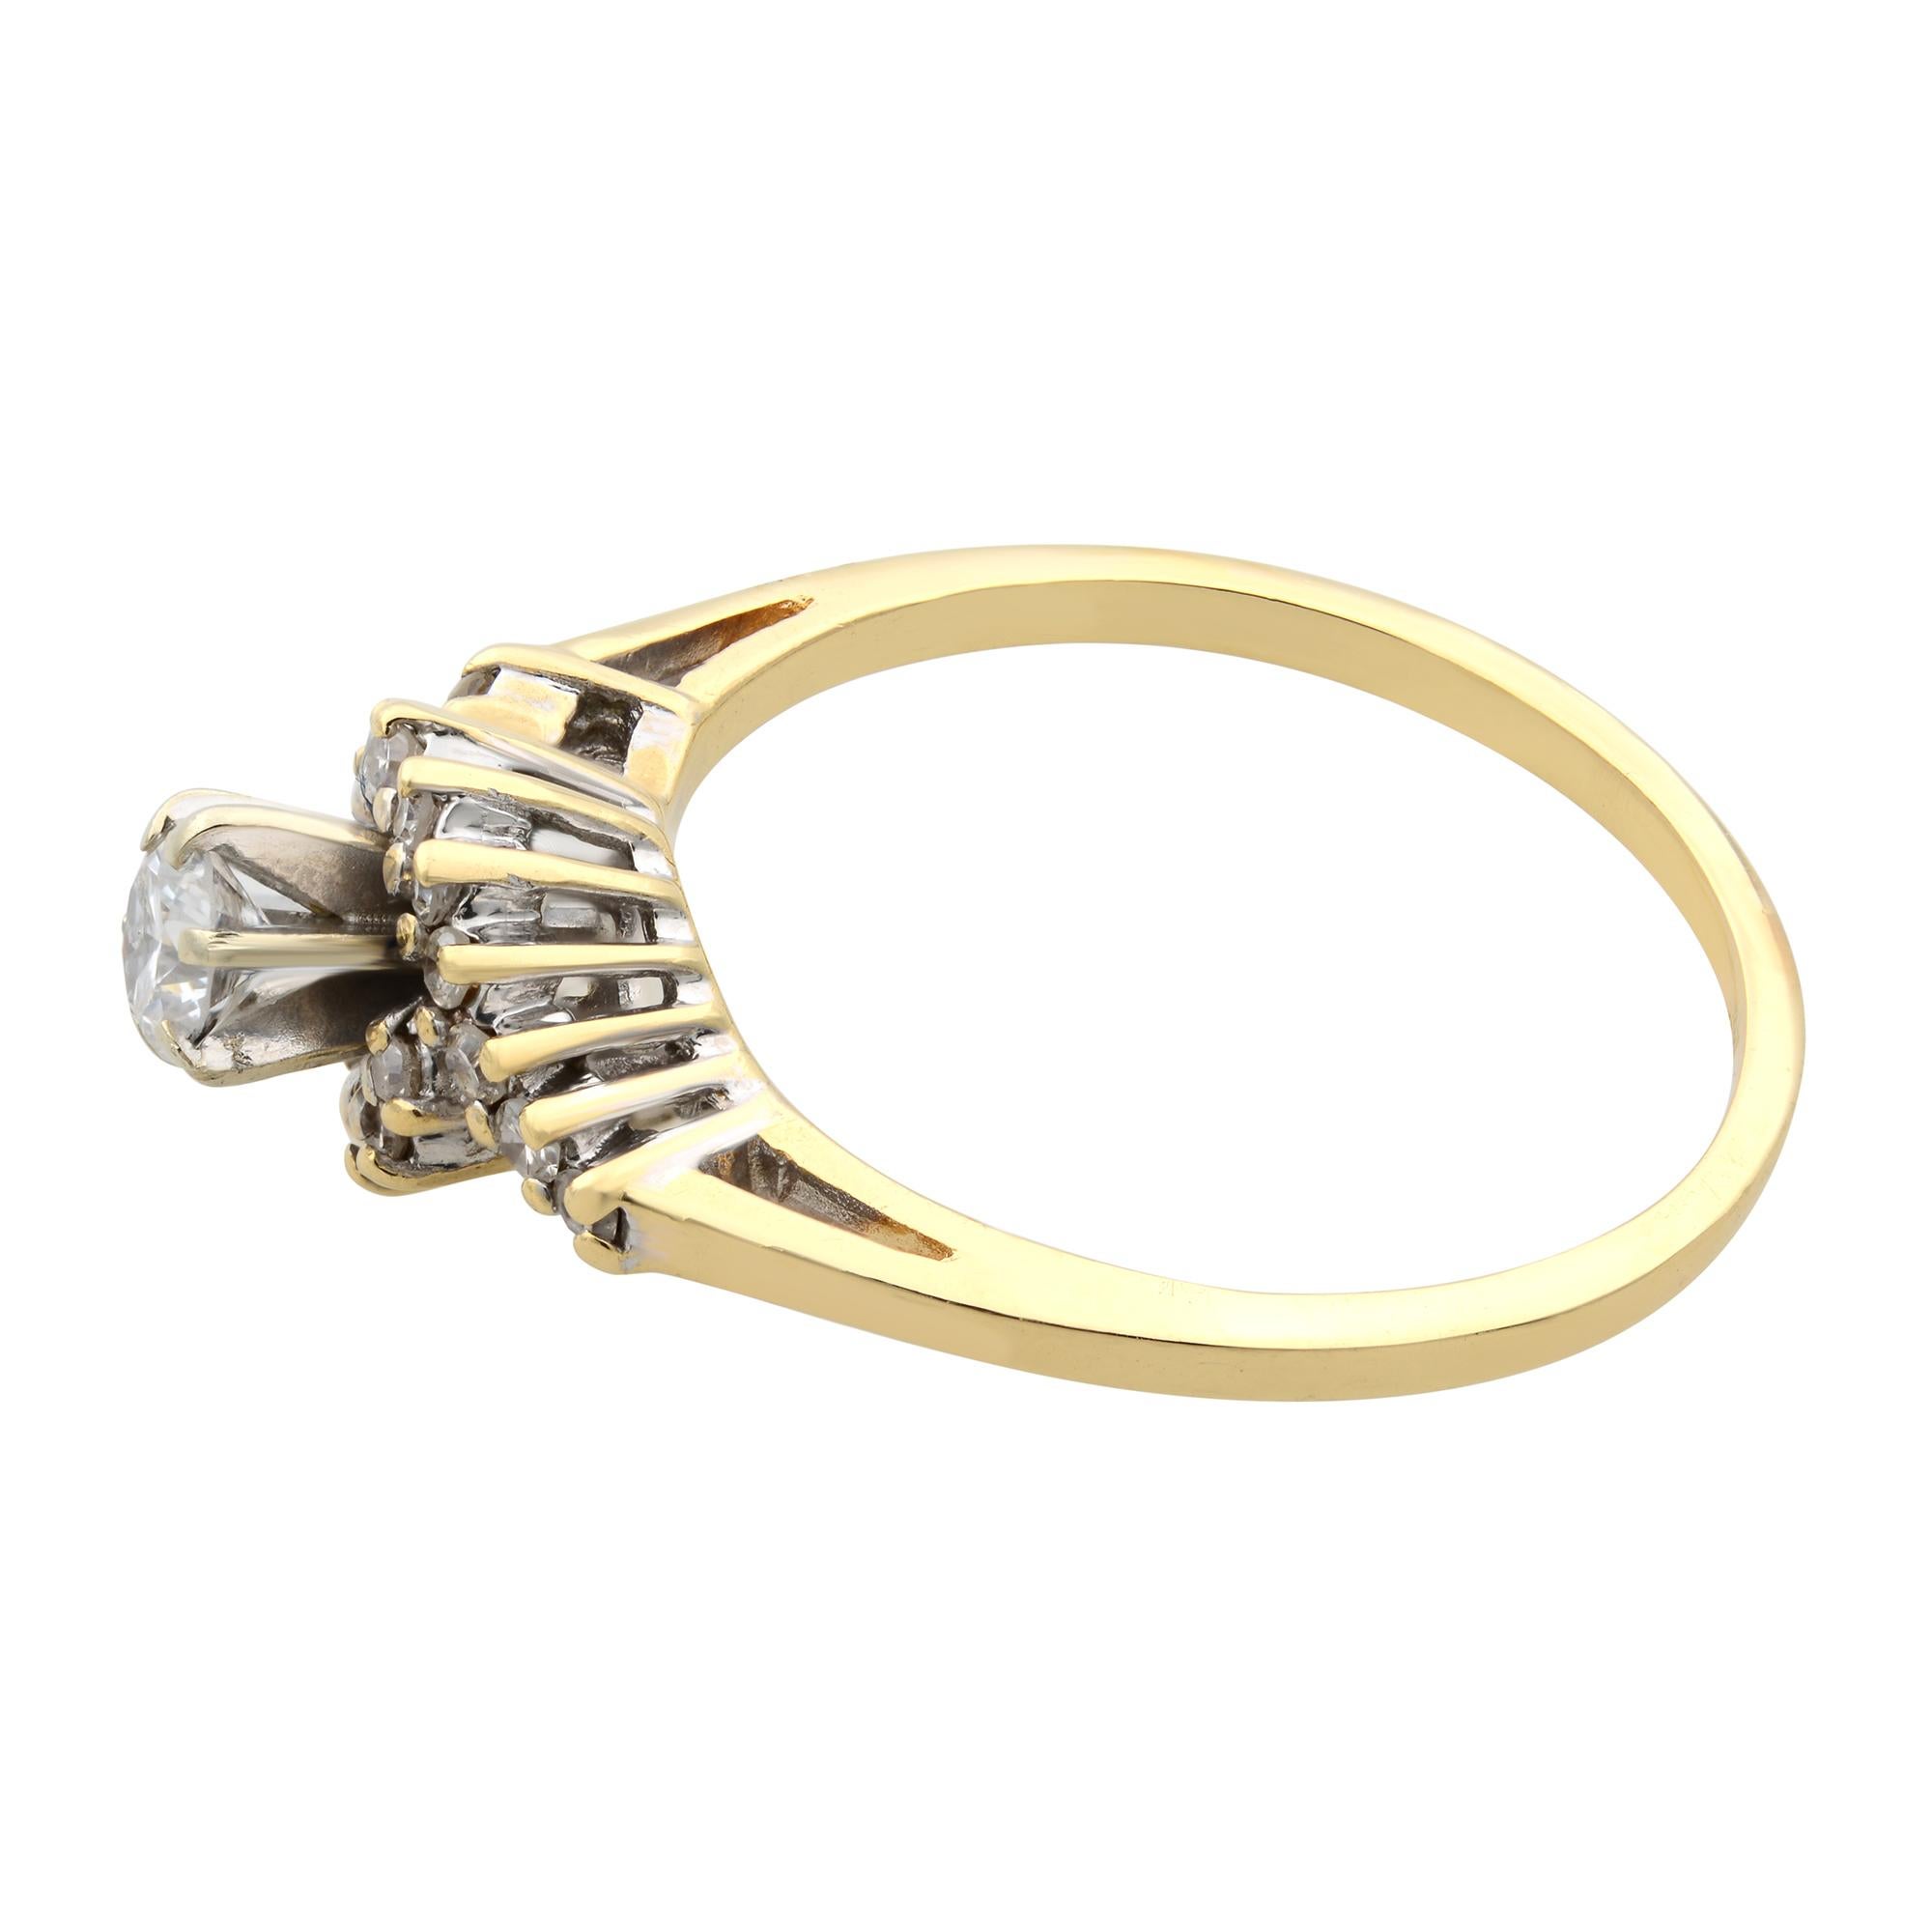 Round Cut Rachel Koen Ladies Diamond Ring 14K Yellow Gold 0.33cttw For Sale